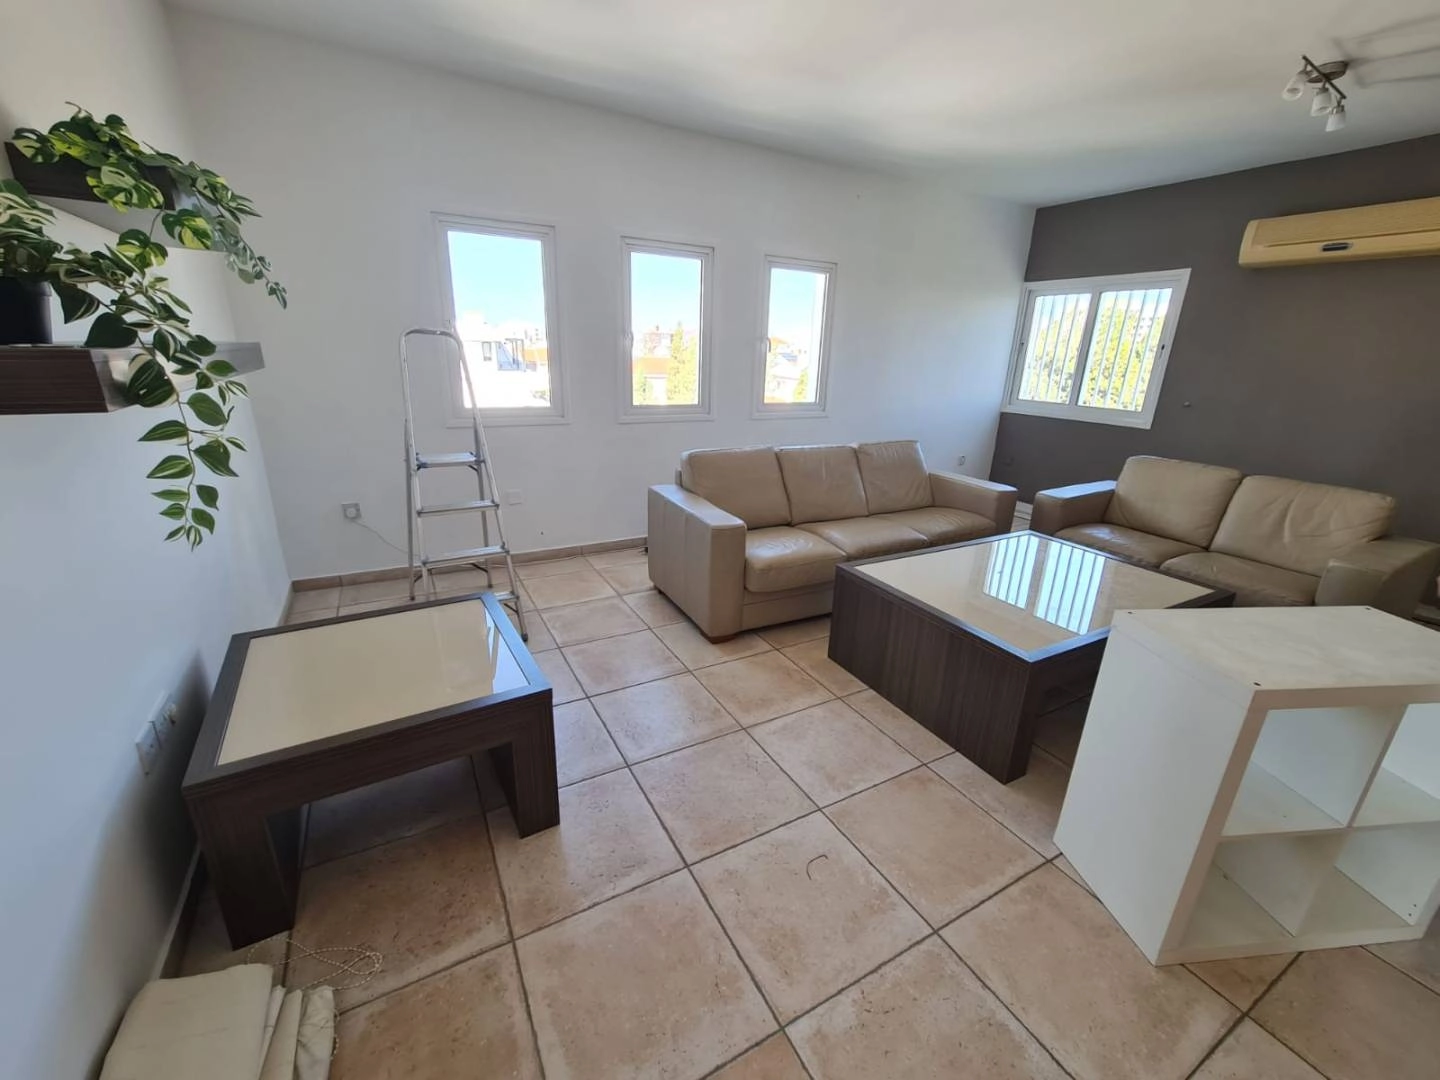 3 Bedroom Apartment for Sale in Larnaca – Finikoudes